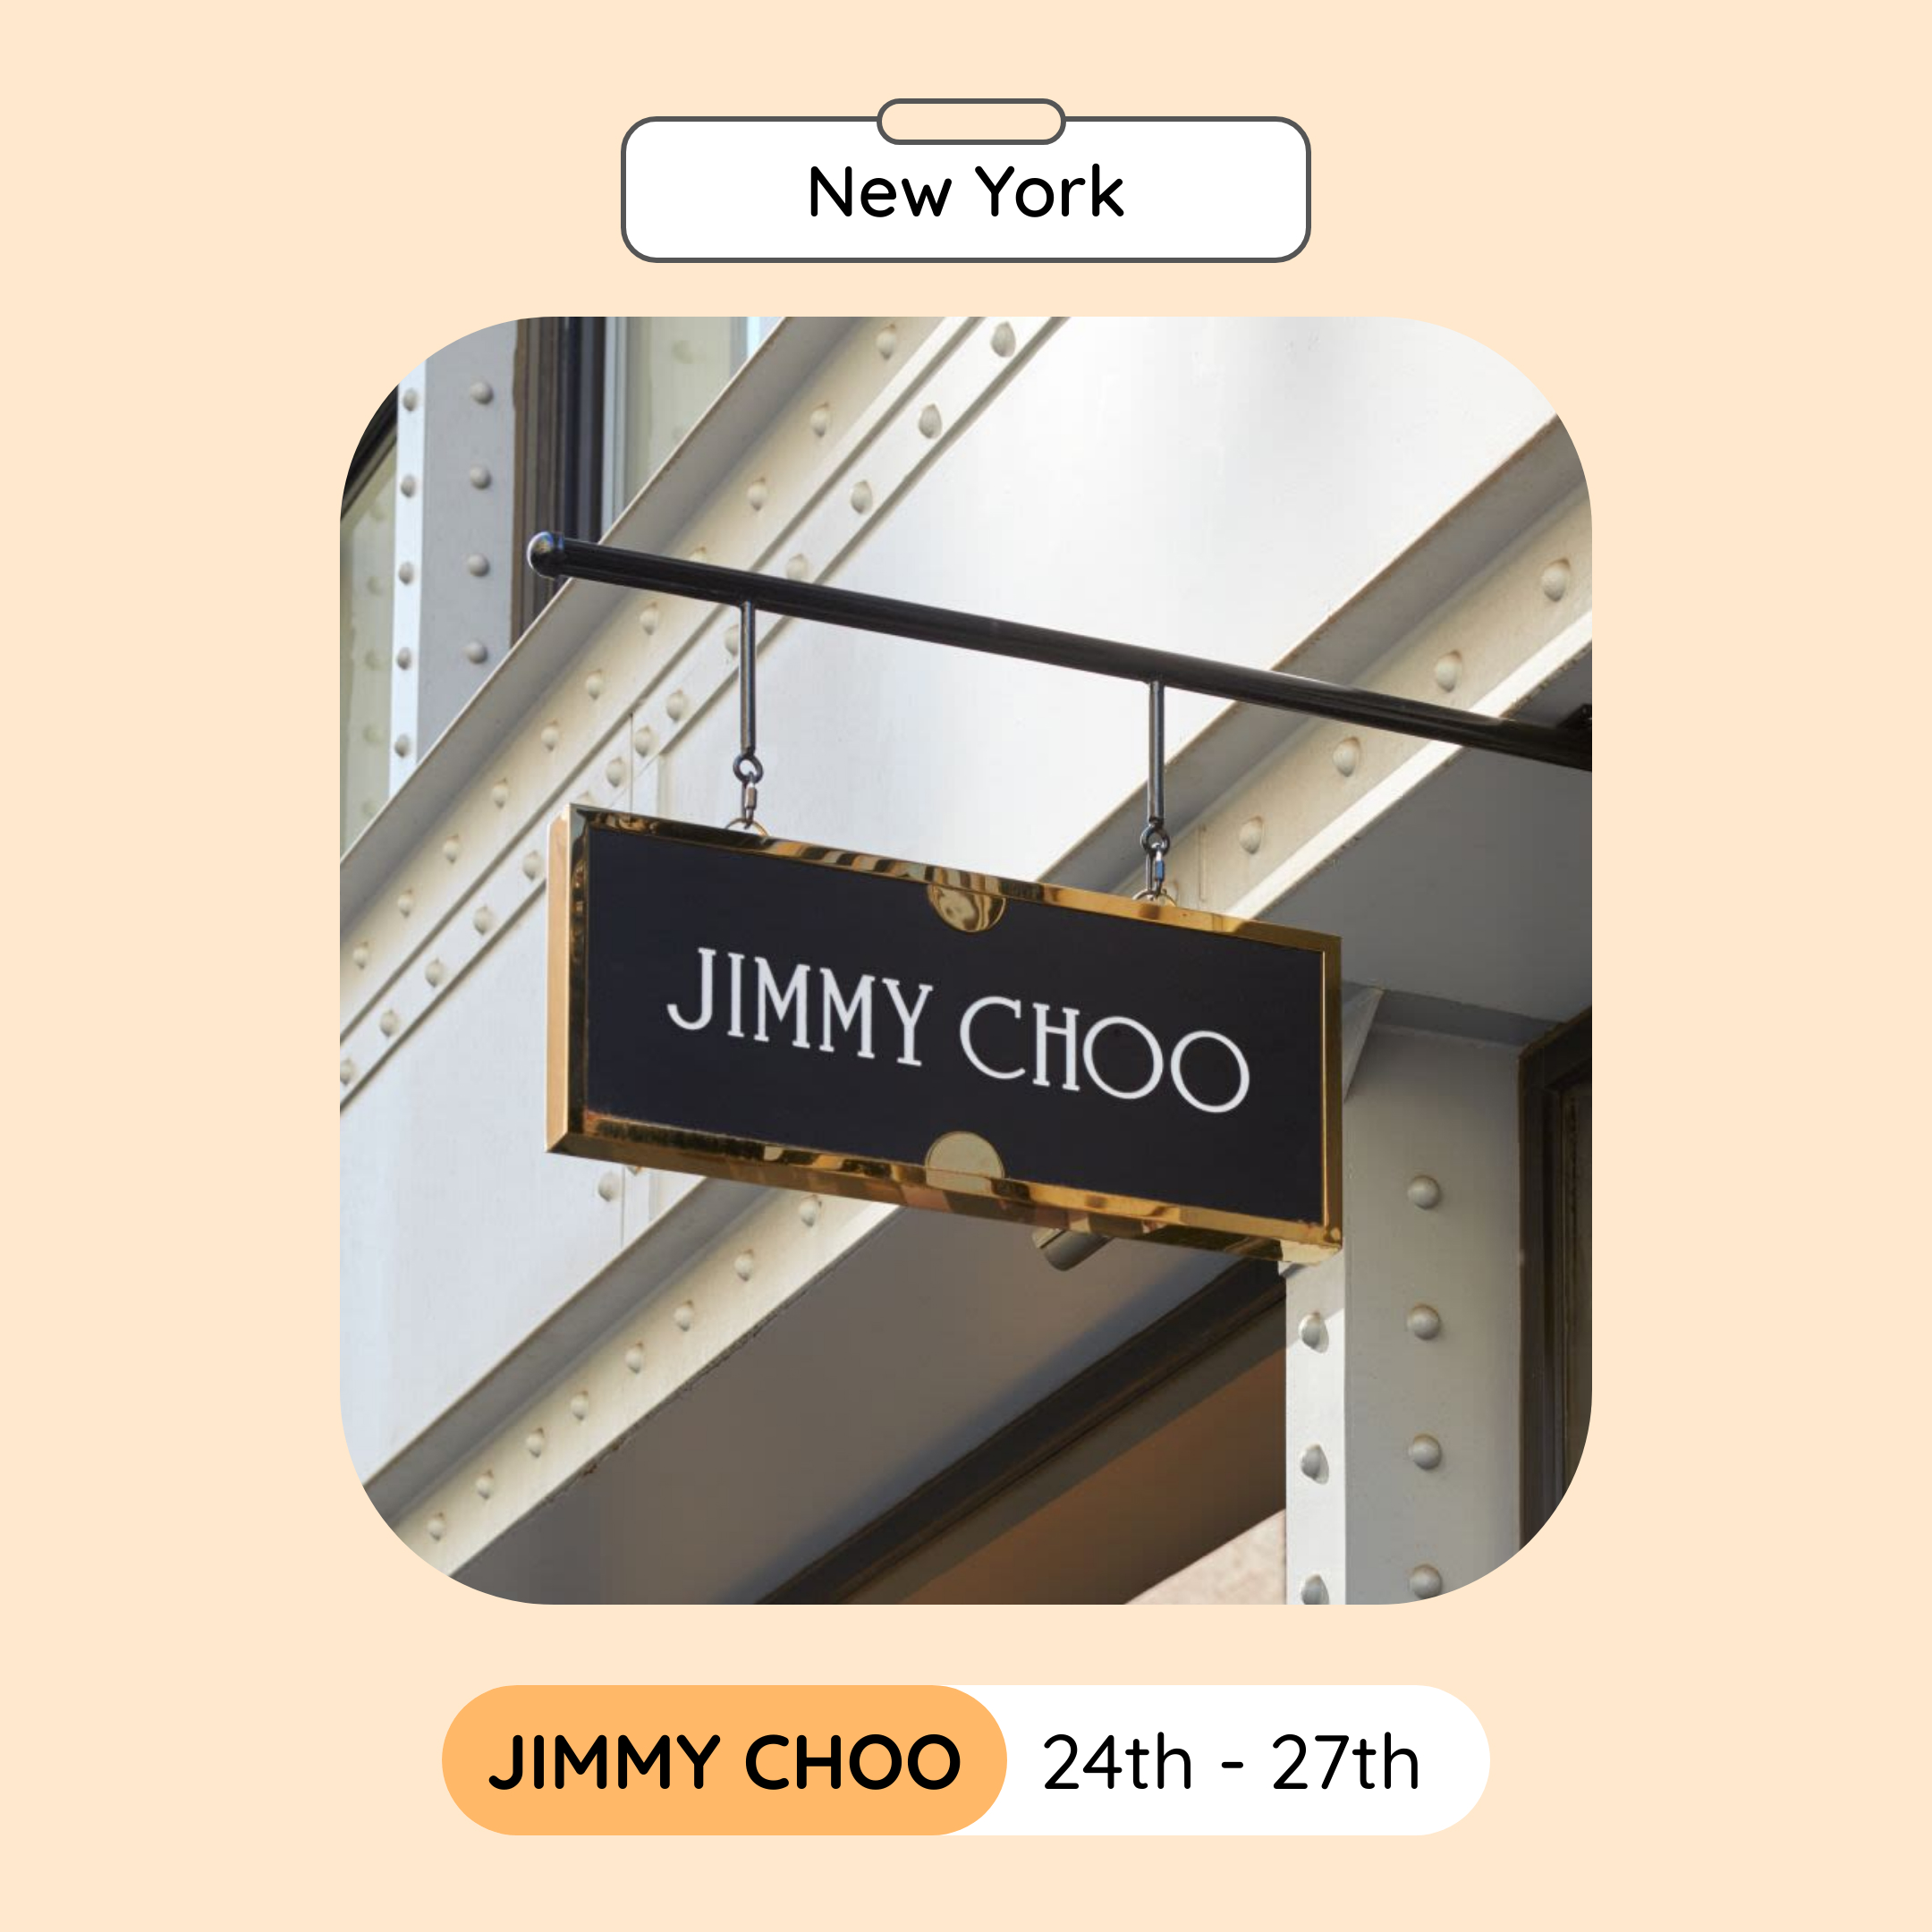 Jimmy Choo sample sale #jimmychoo #samplesale #jimmychoosamplesale